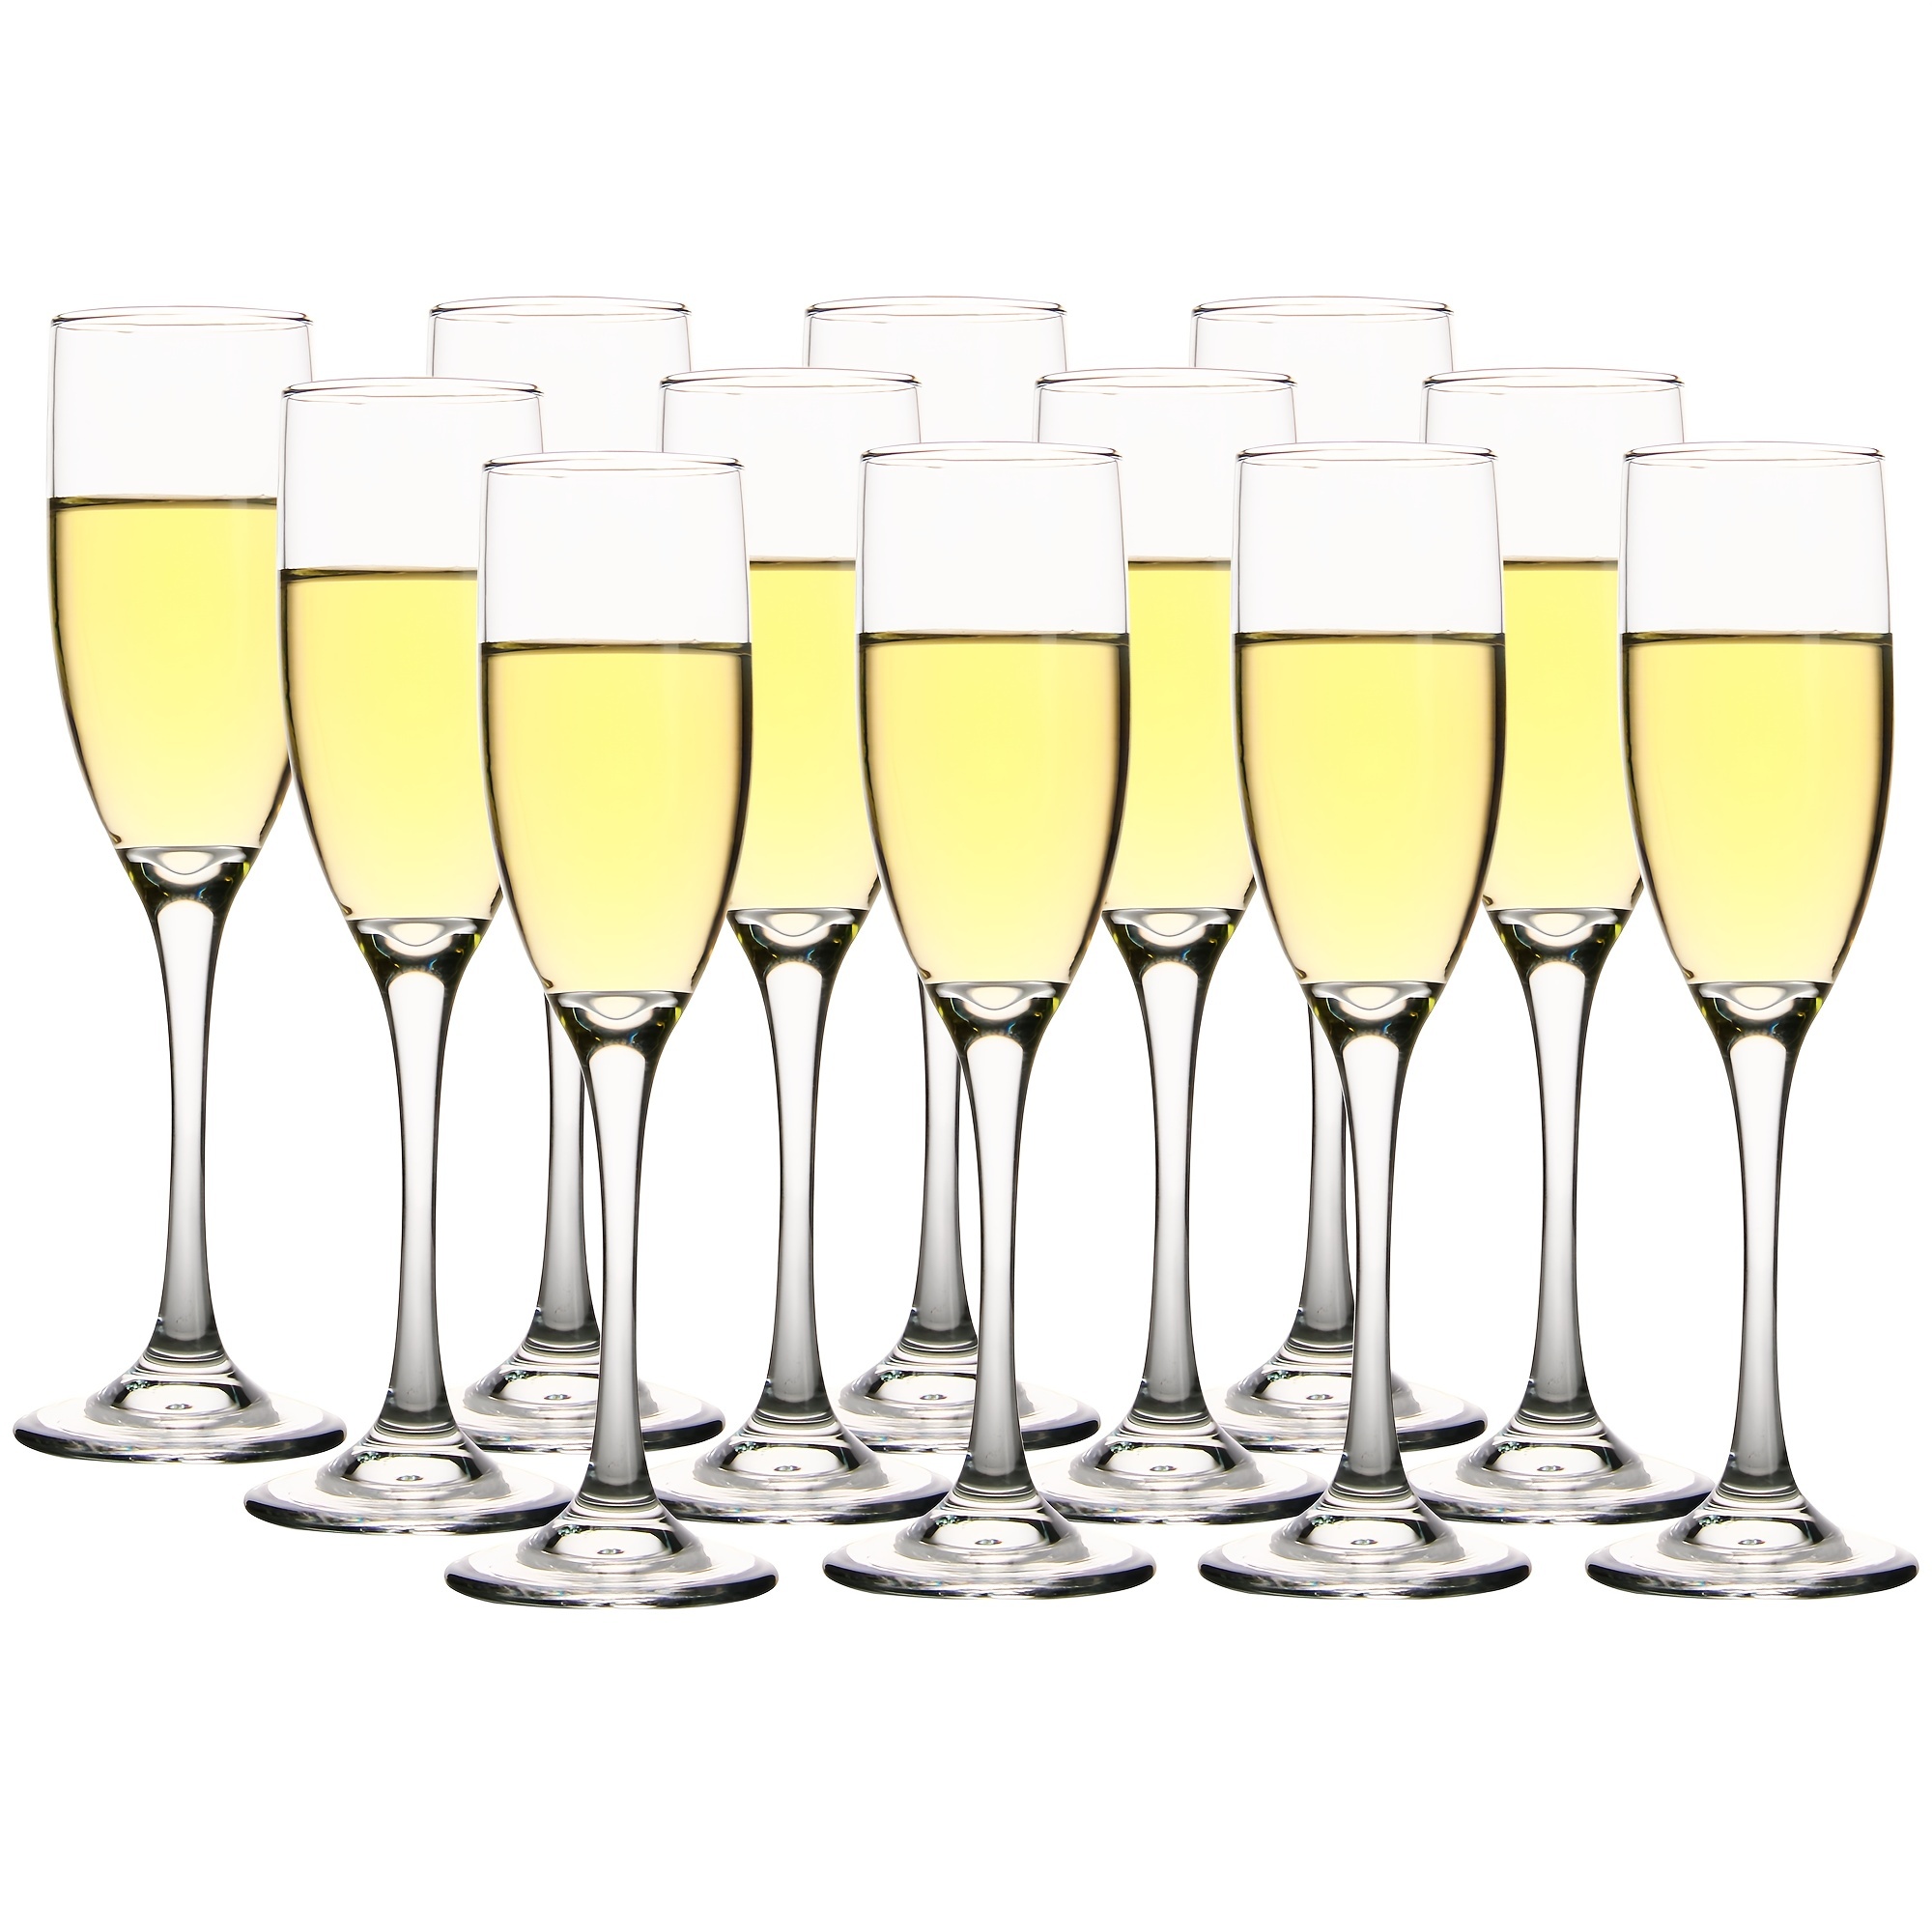 UMEIED Champagne Flutes Set of 12, 6 Oz Premium Glasses Transparent